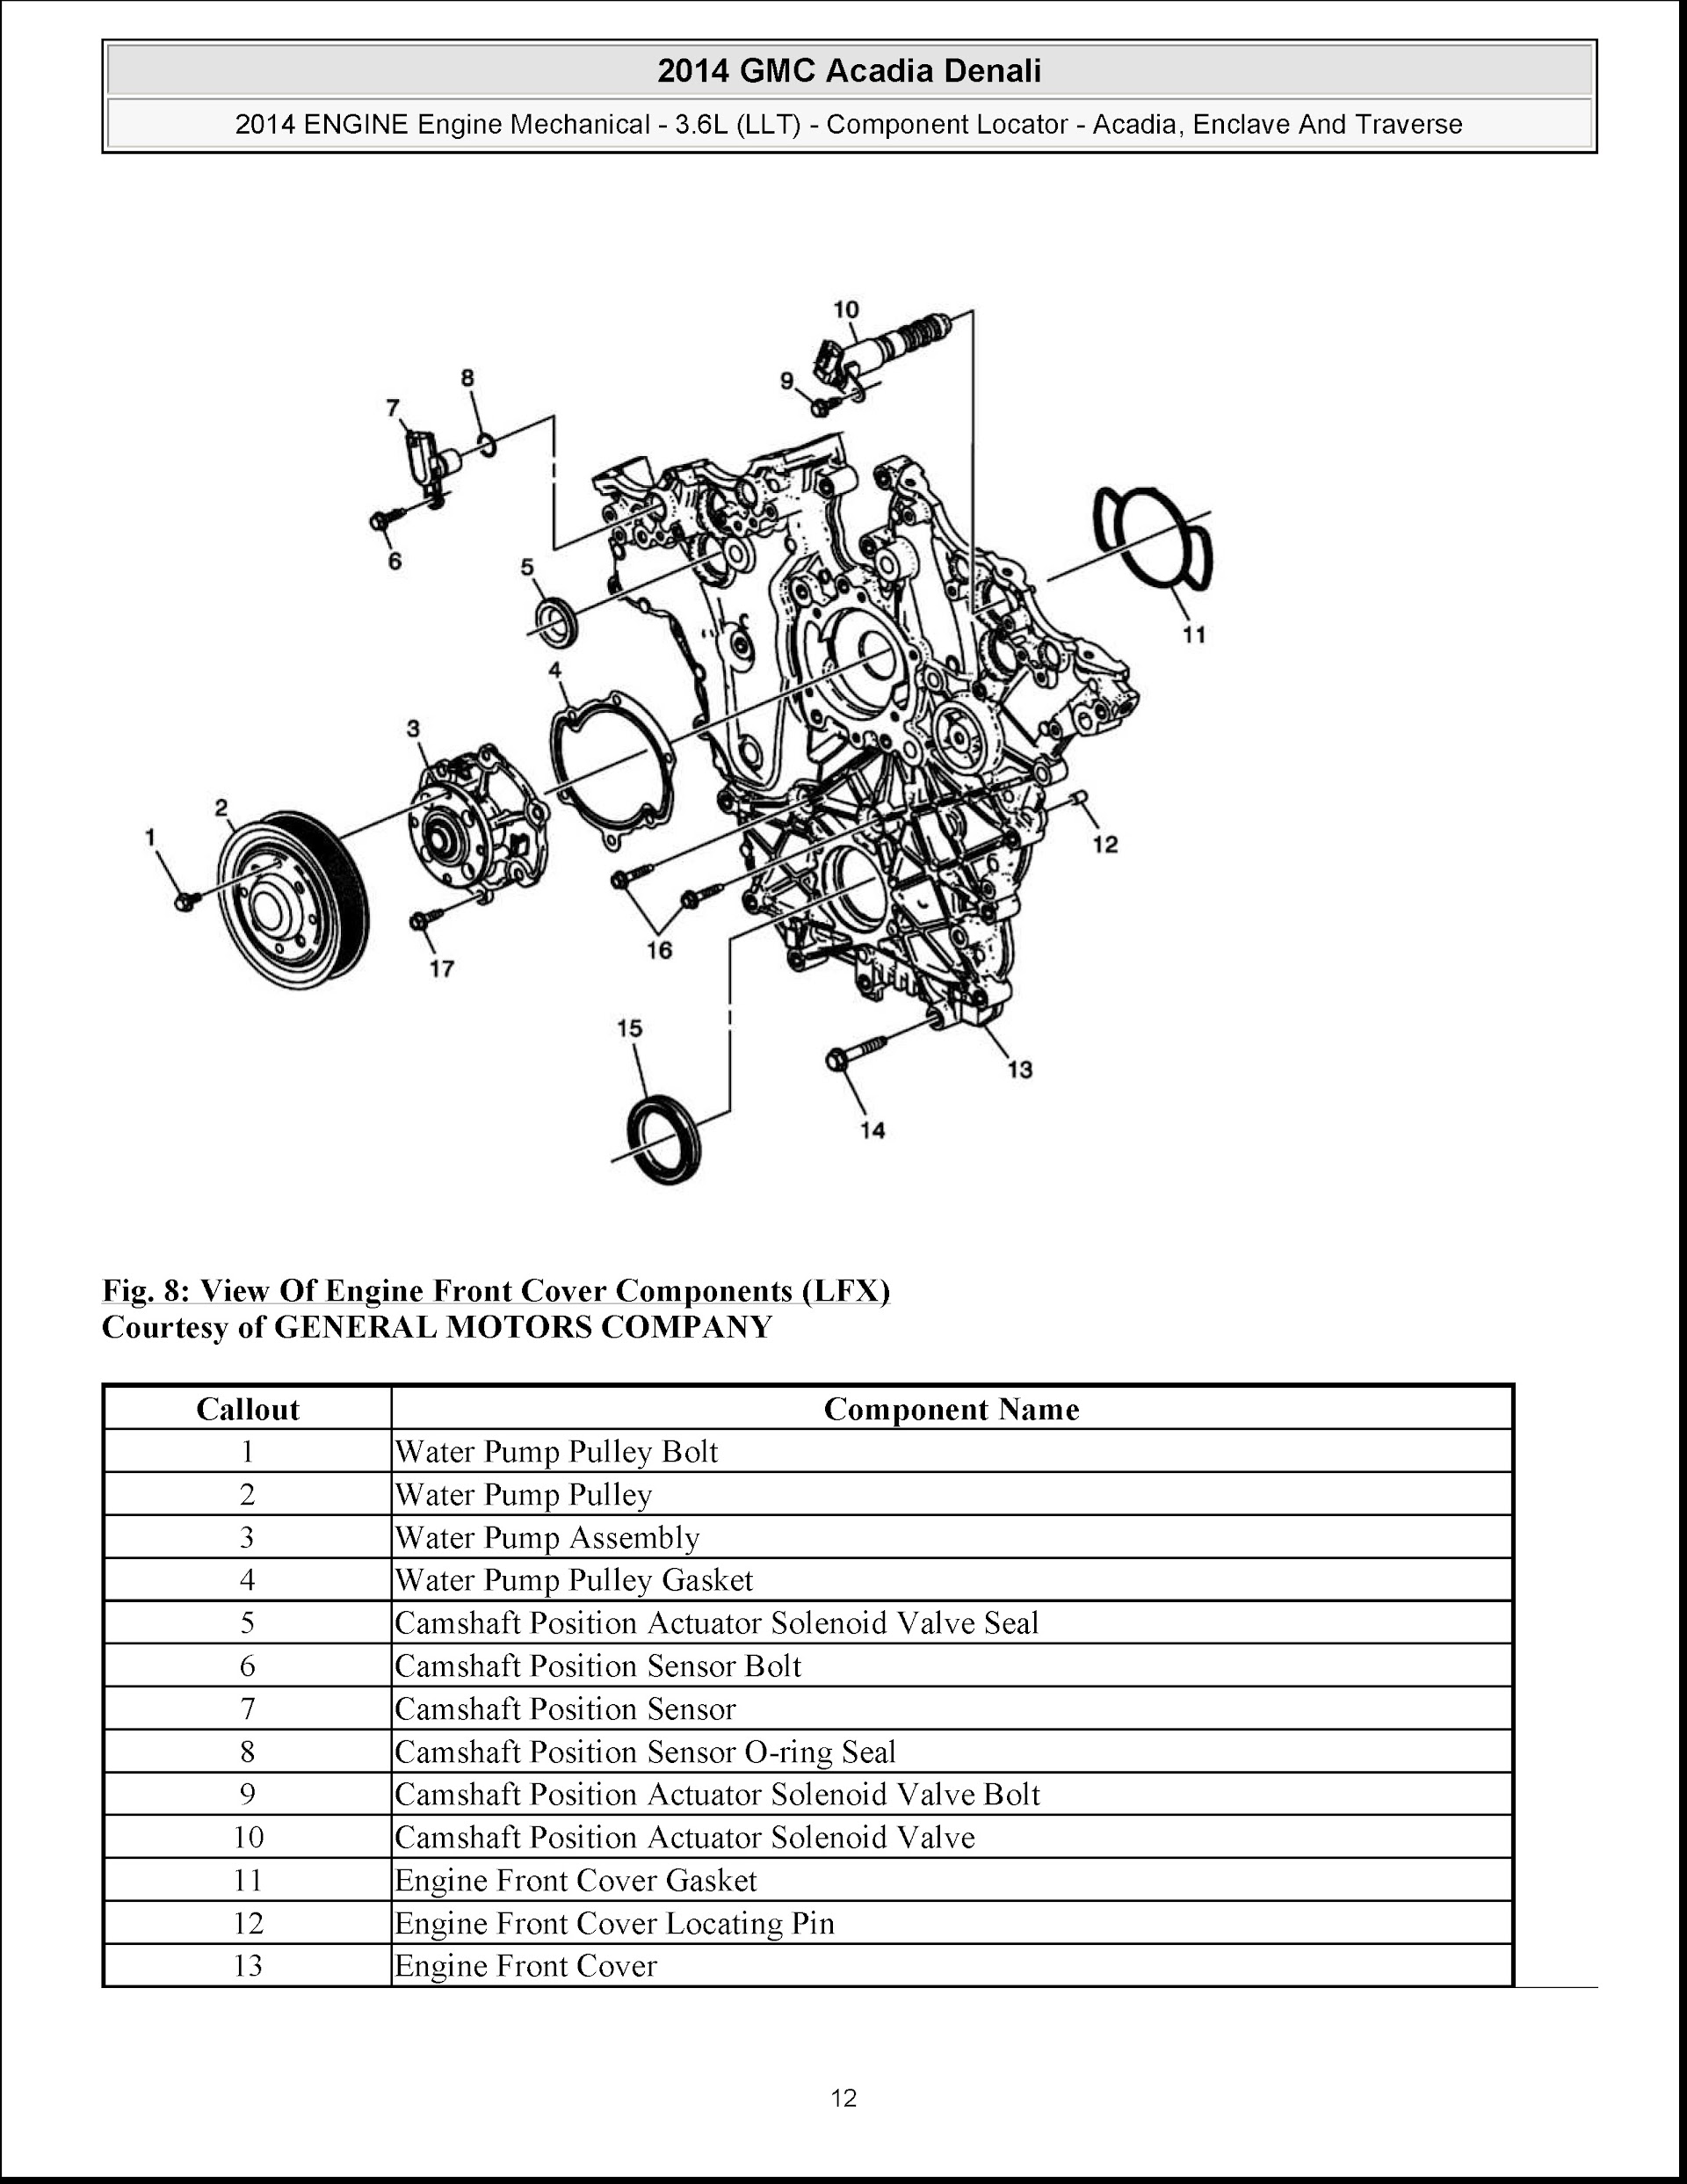 2013-2016 GMC Acadia Repair Manual (Denali, Enclave and Chevrolet Traverse), Engine Mechanical, Component Locator